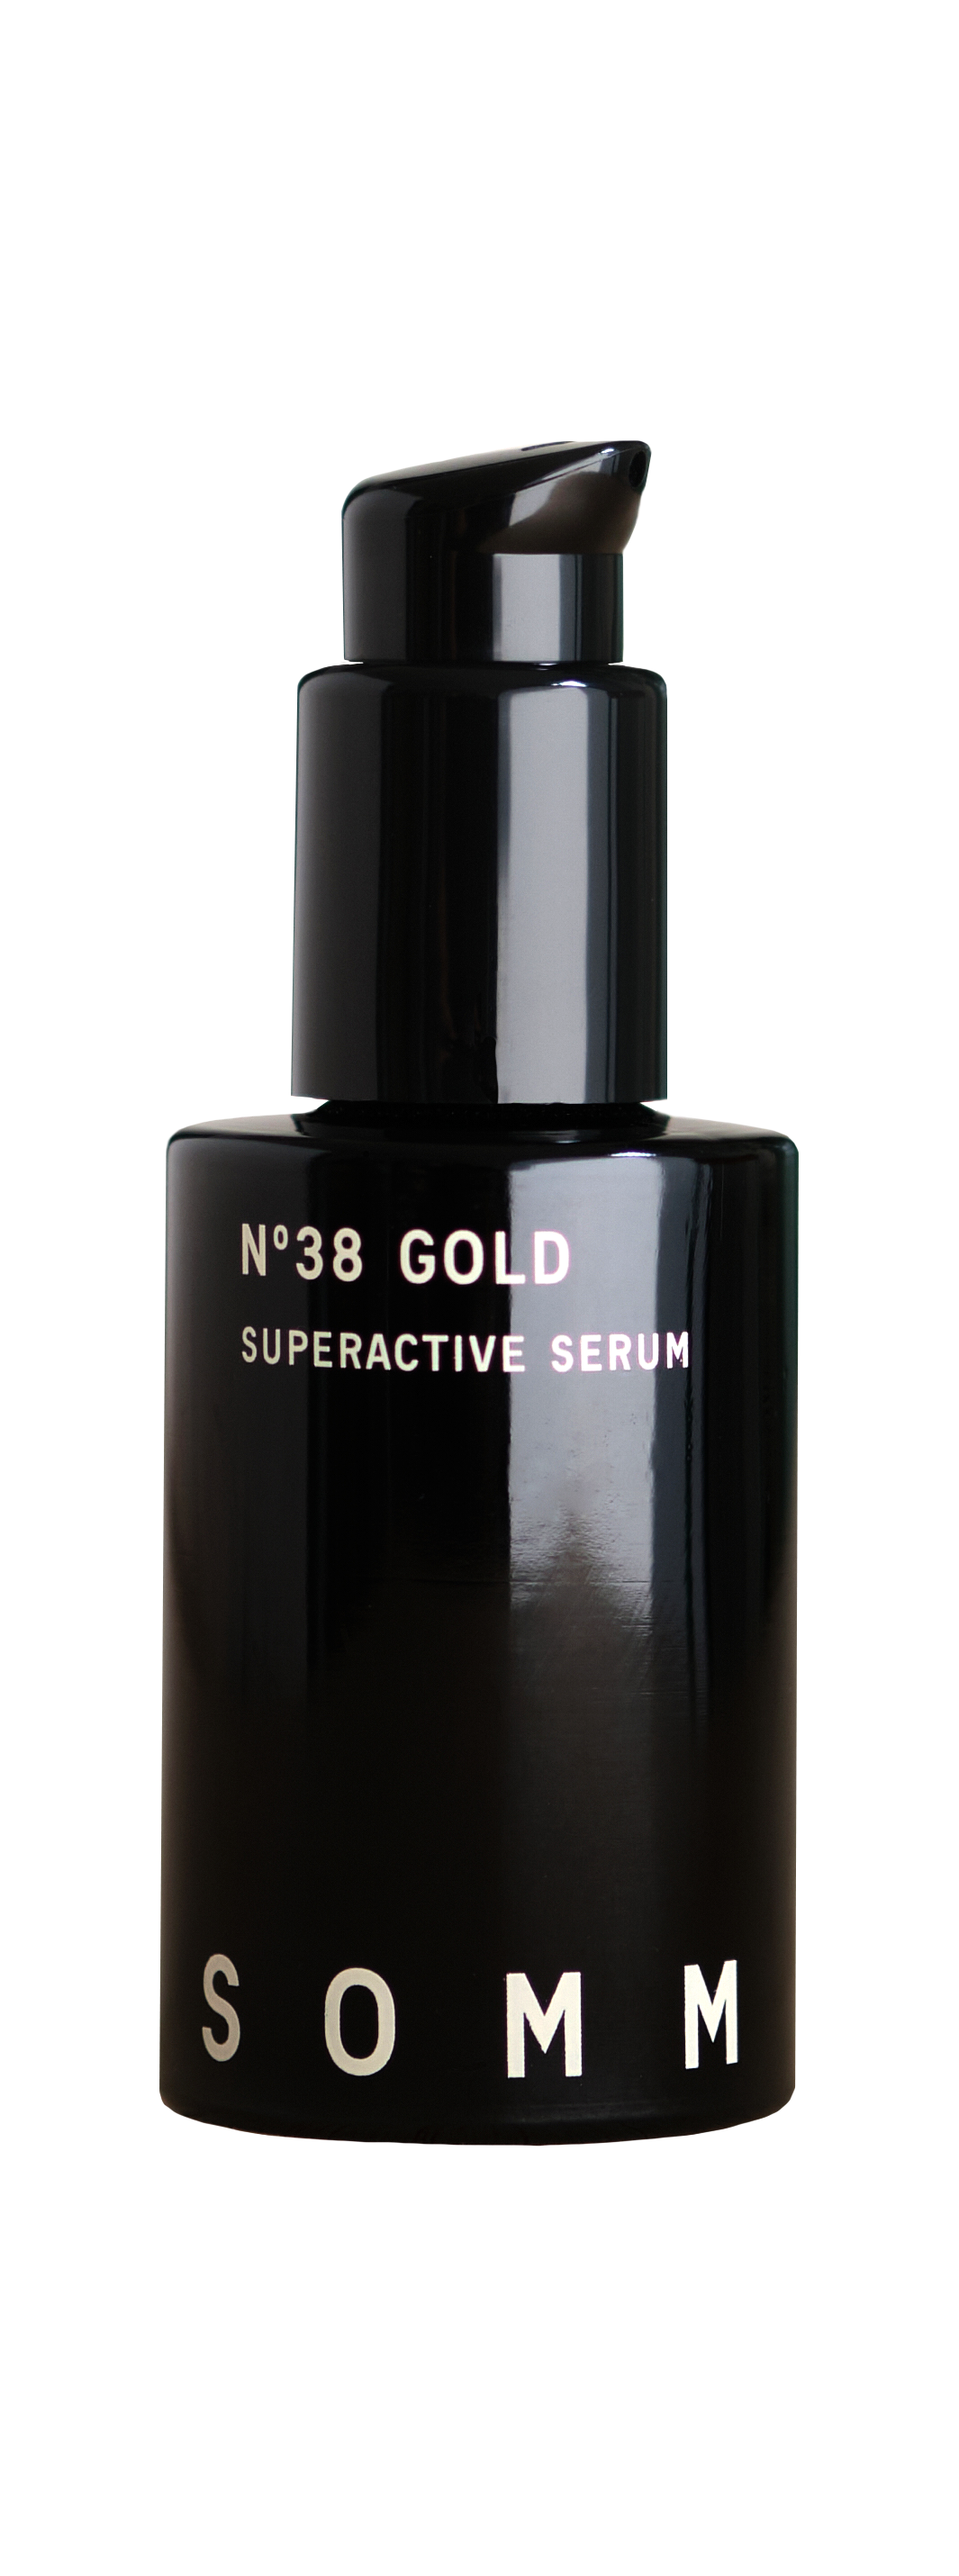 N°38 Gold Superactive Serum